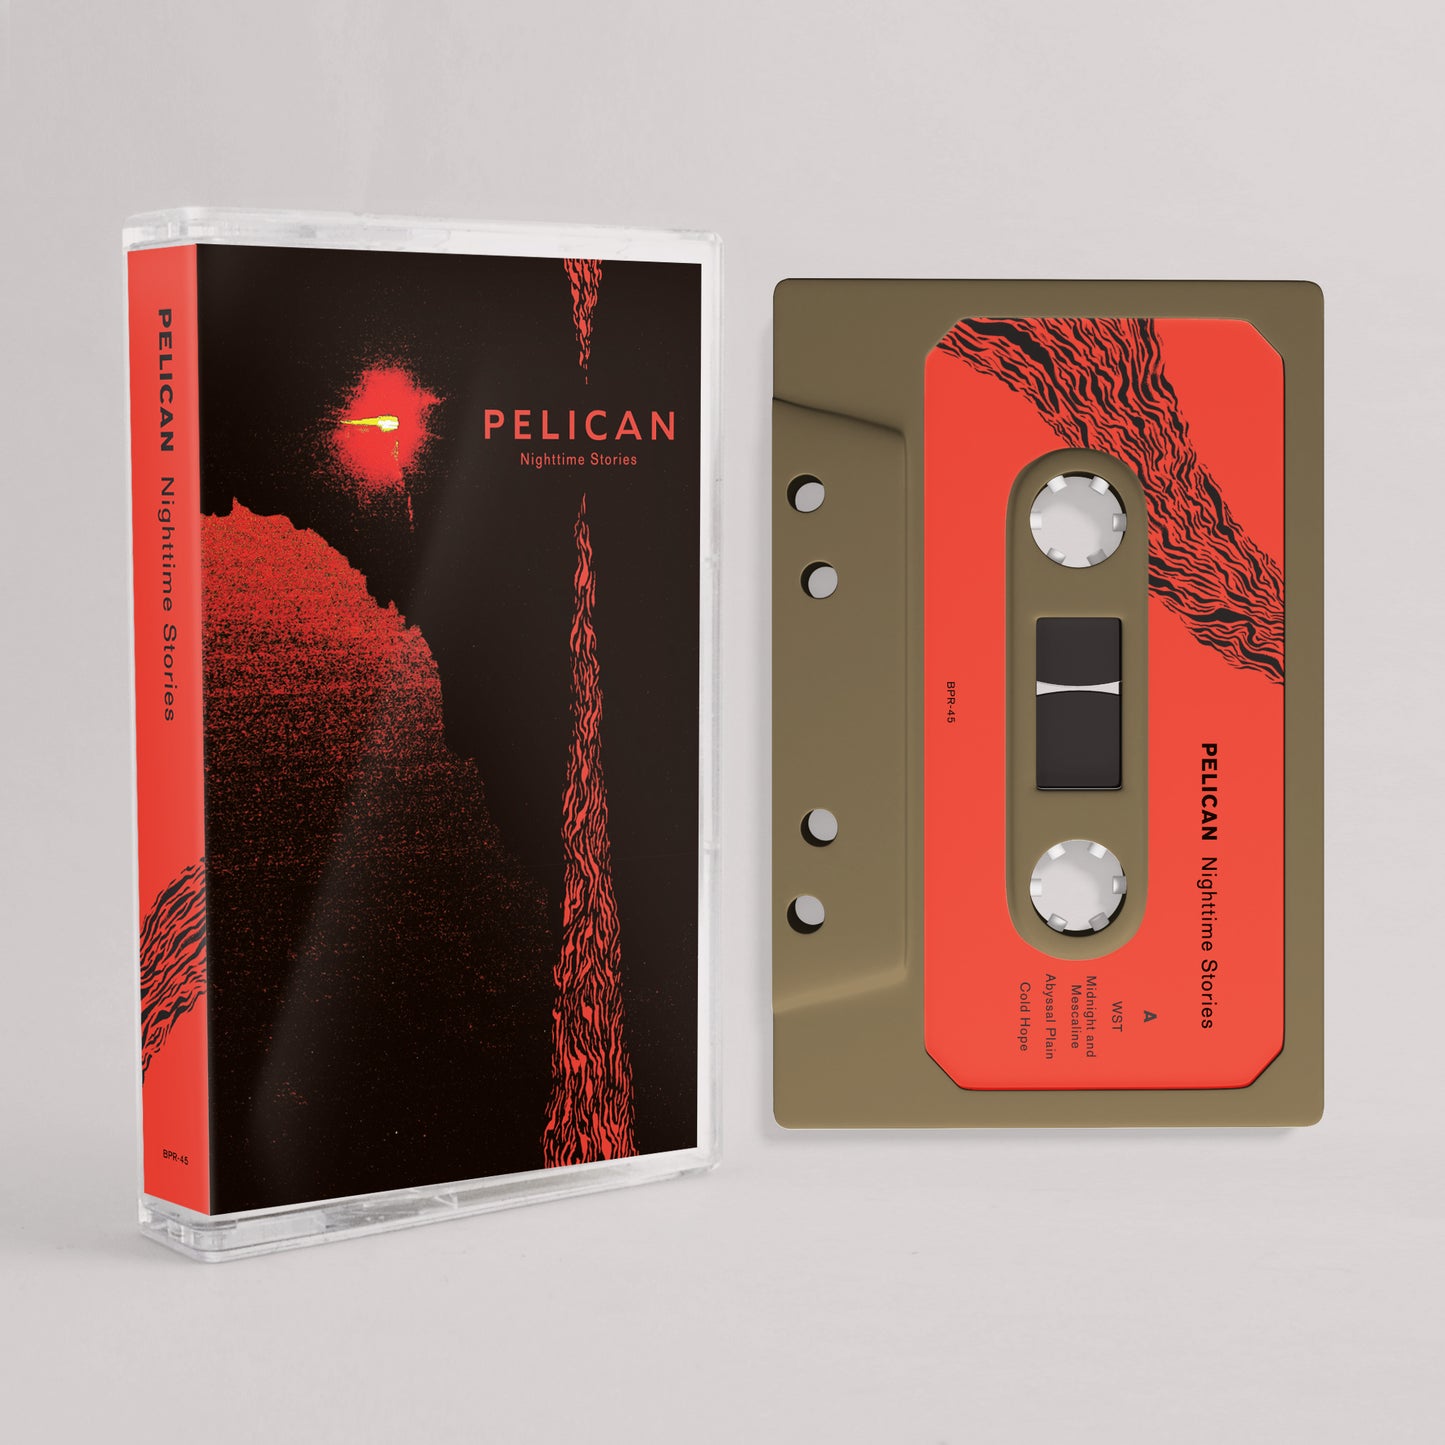 PELICAN - Nighttime Stories - Cassette Tape